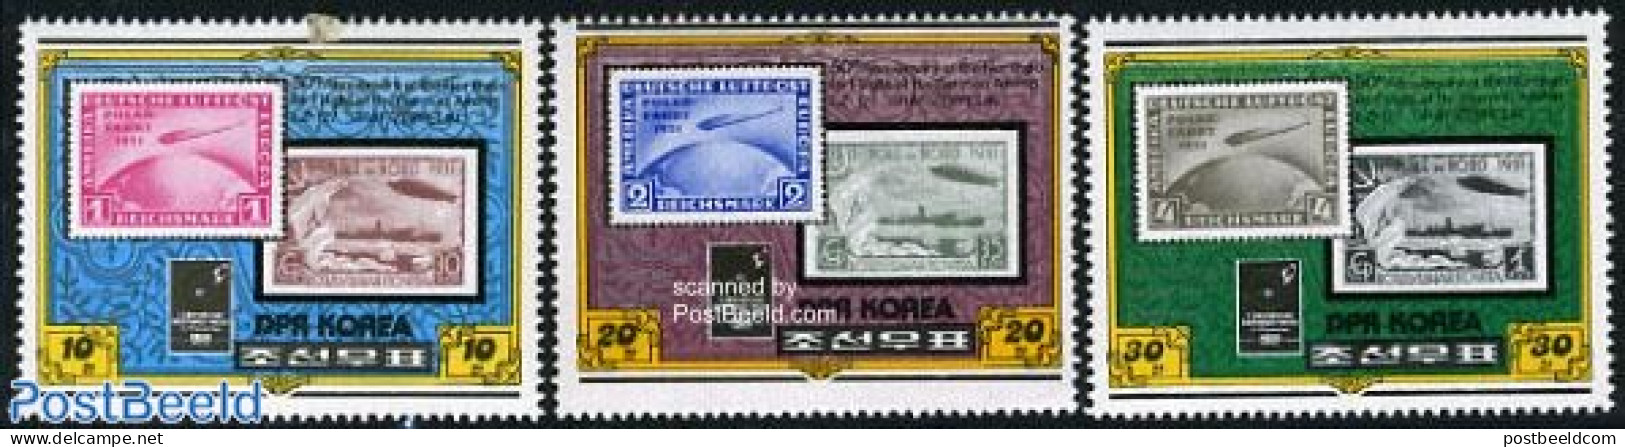 Korea, North 1980 Int. Stamp Fair Essen 3v, Mint NH, Transport - Stamps On Stamps - Ships And Boats - Zeppelins - Stamps On Stamps